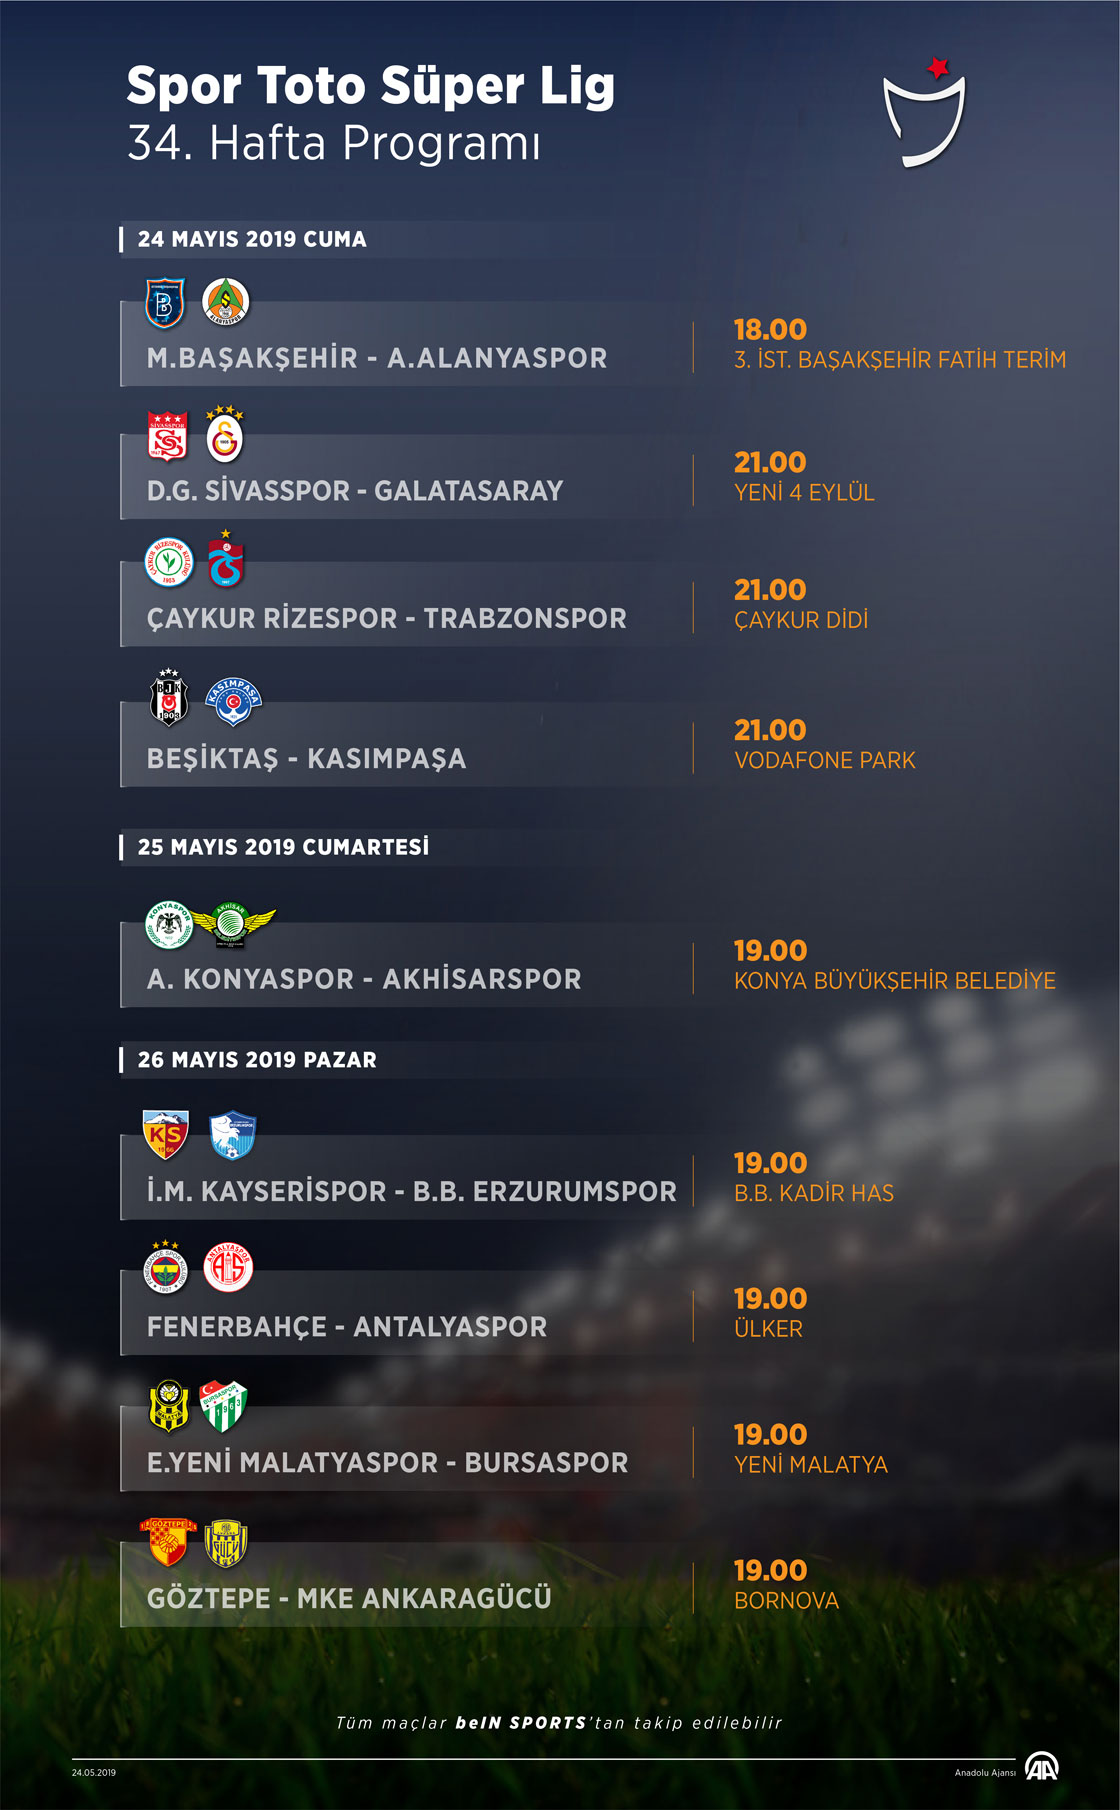  Spor Toto Süper Lig 34. Hafta Programı